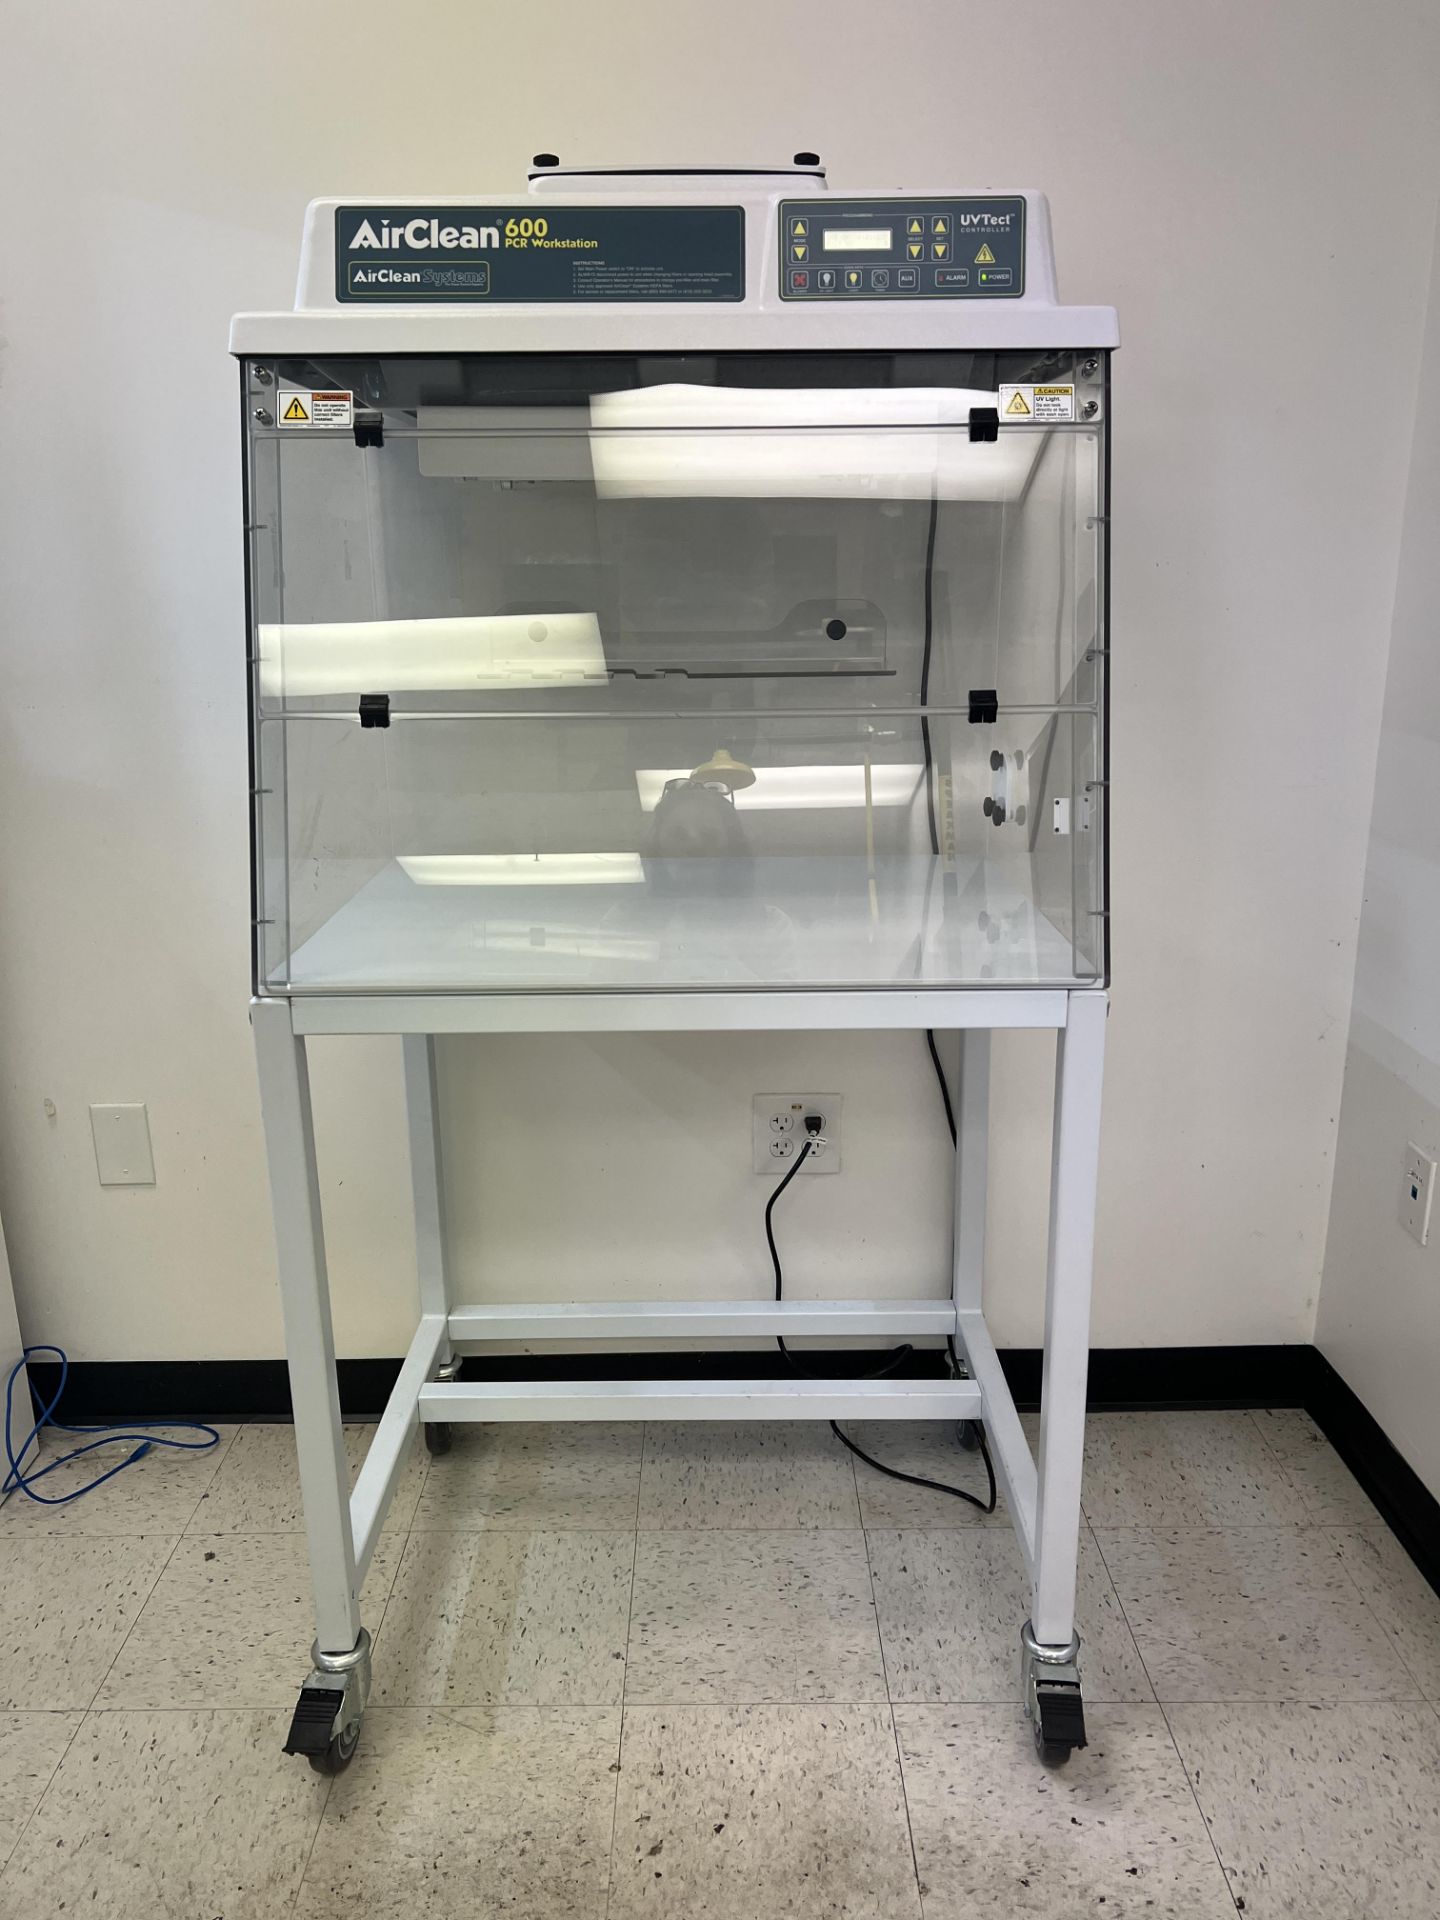 PCR Workstation, Salinas, CA - Image 2 of 7